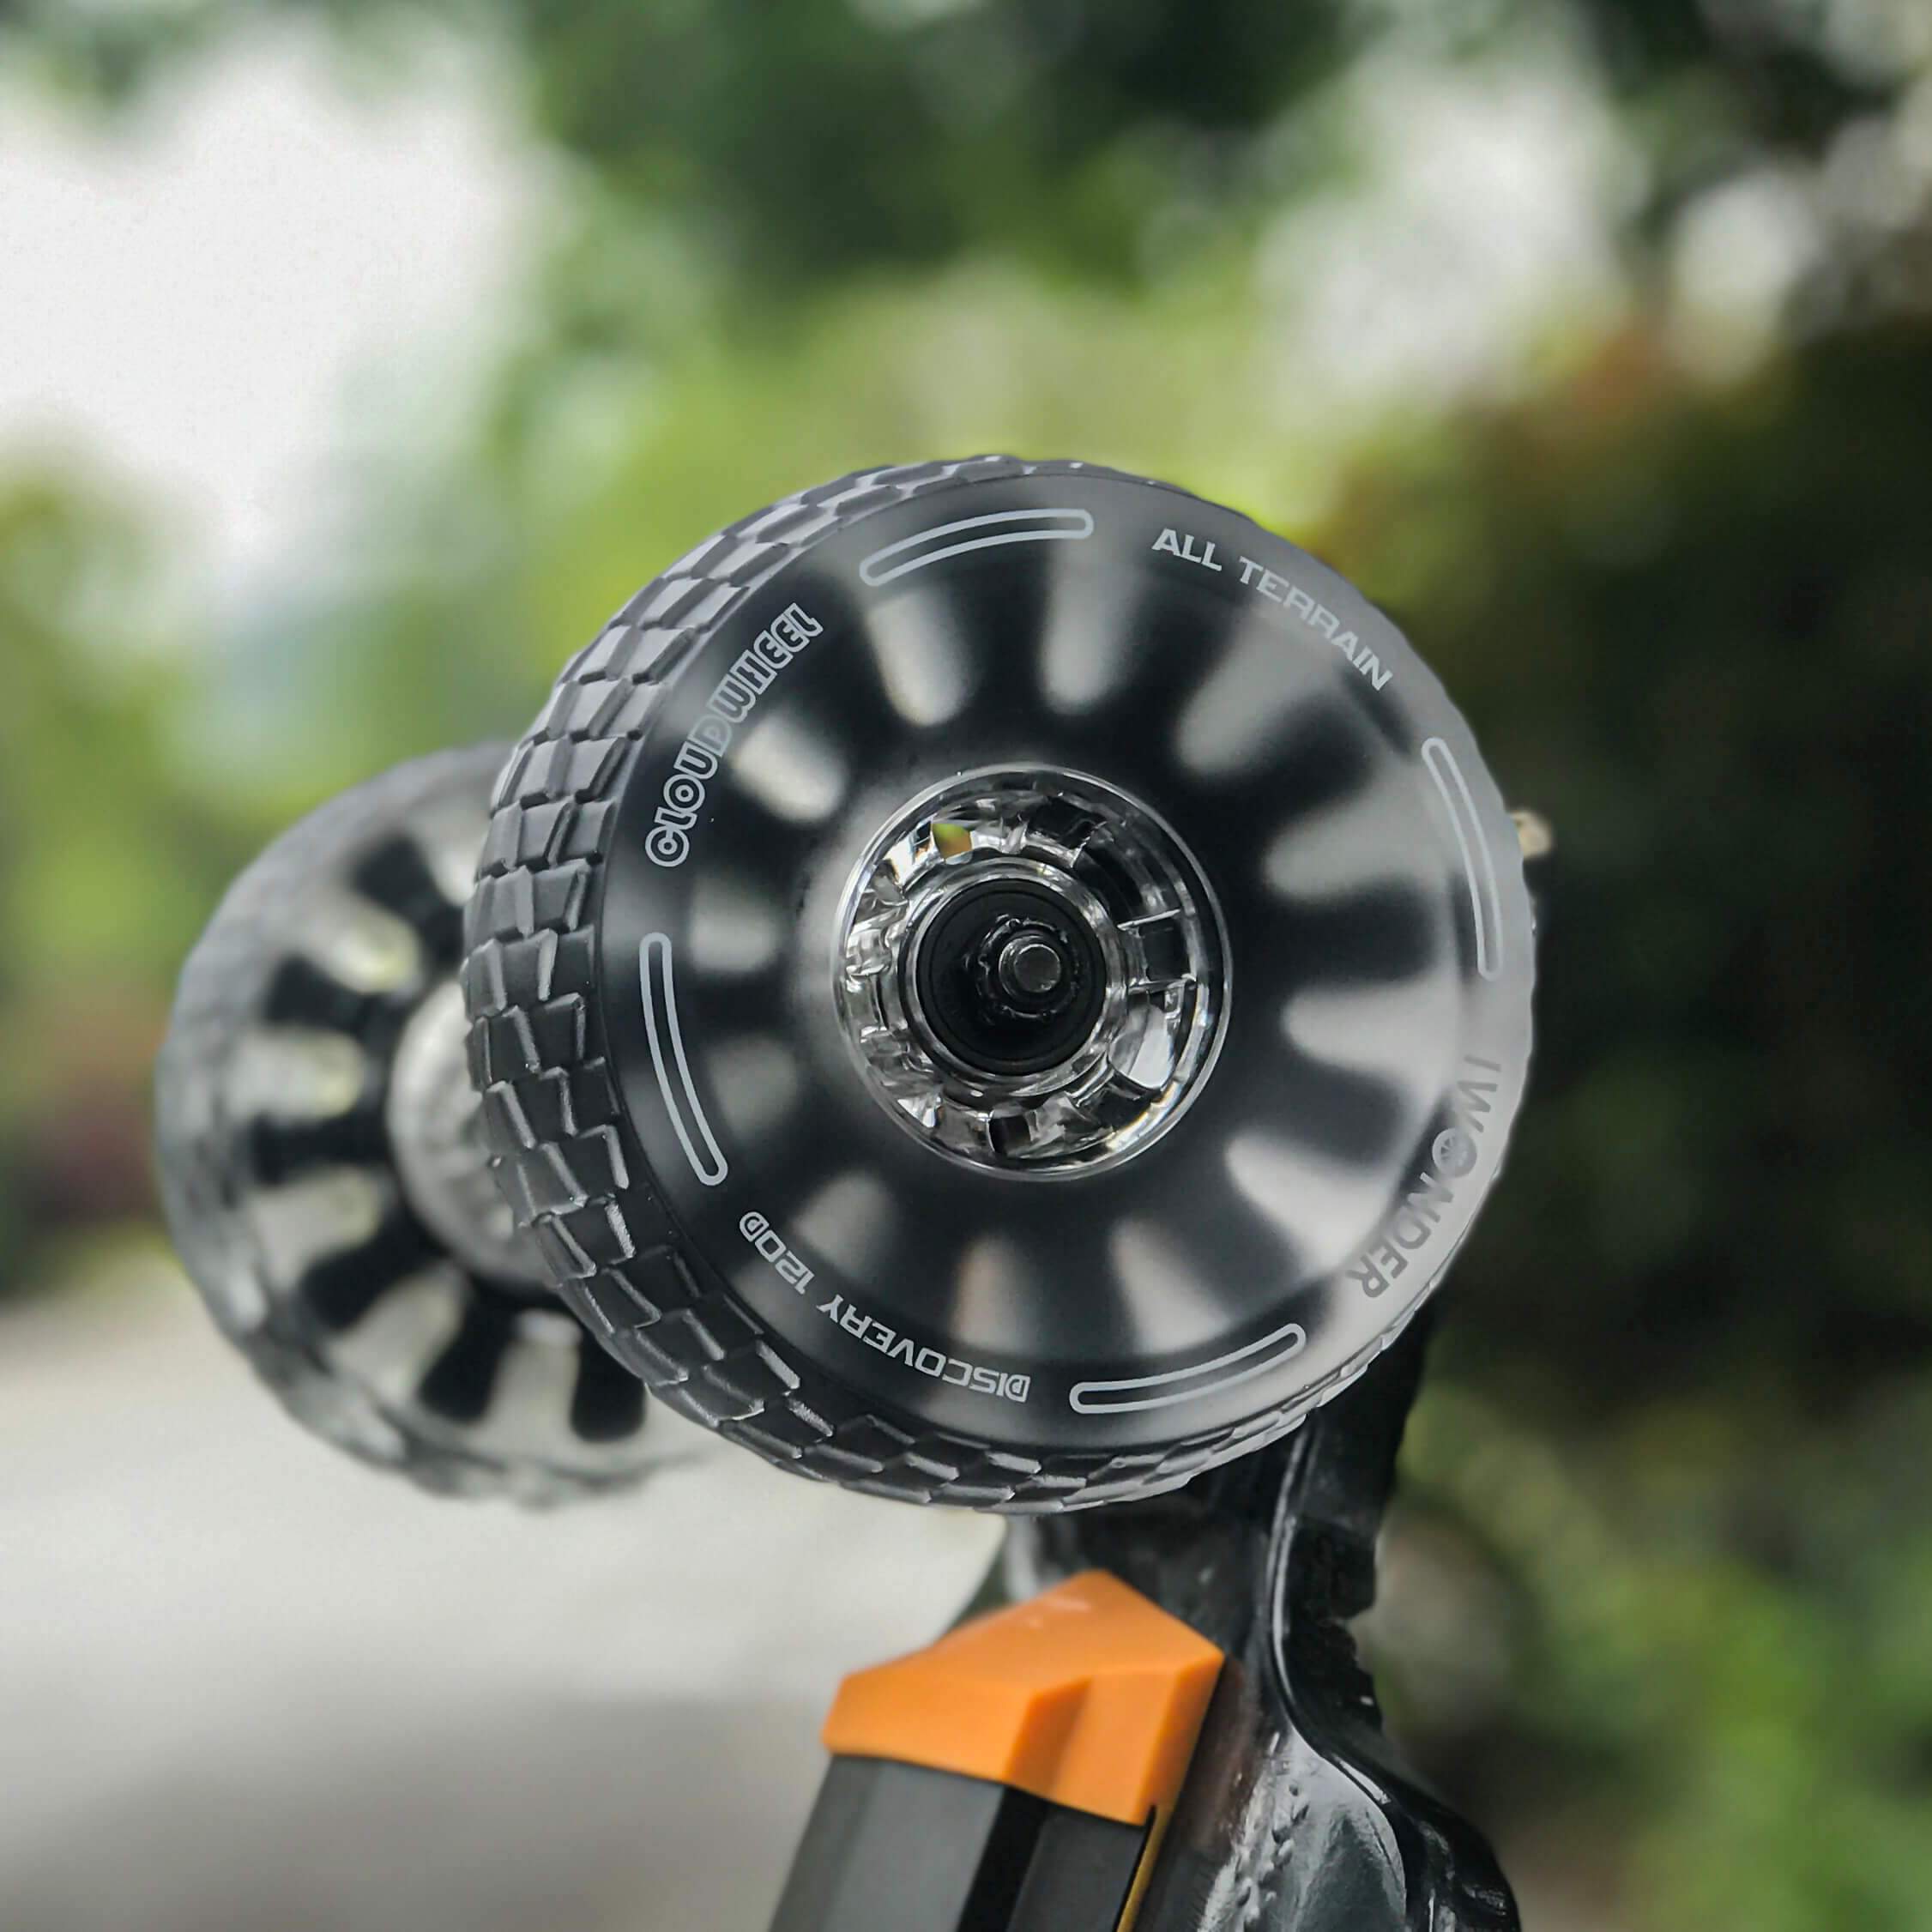 CLOUDWHEEL Discovery 120mm/105mm Urban All Terrain Off Road Electric Skateboard Wheels For Tynee Boards